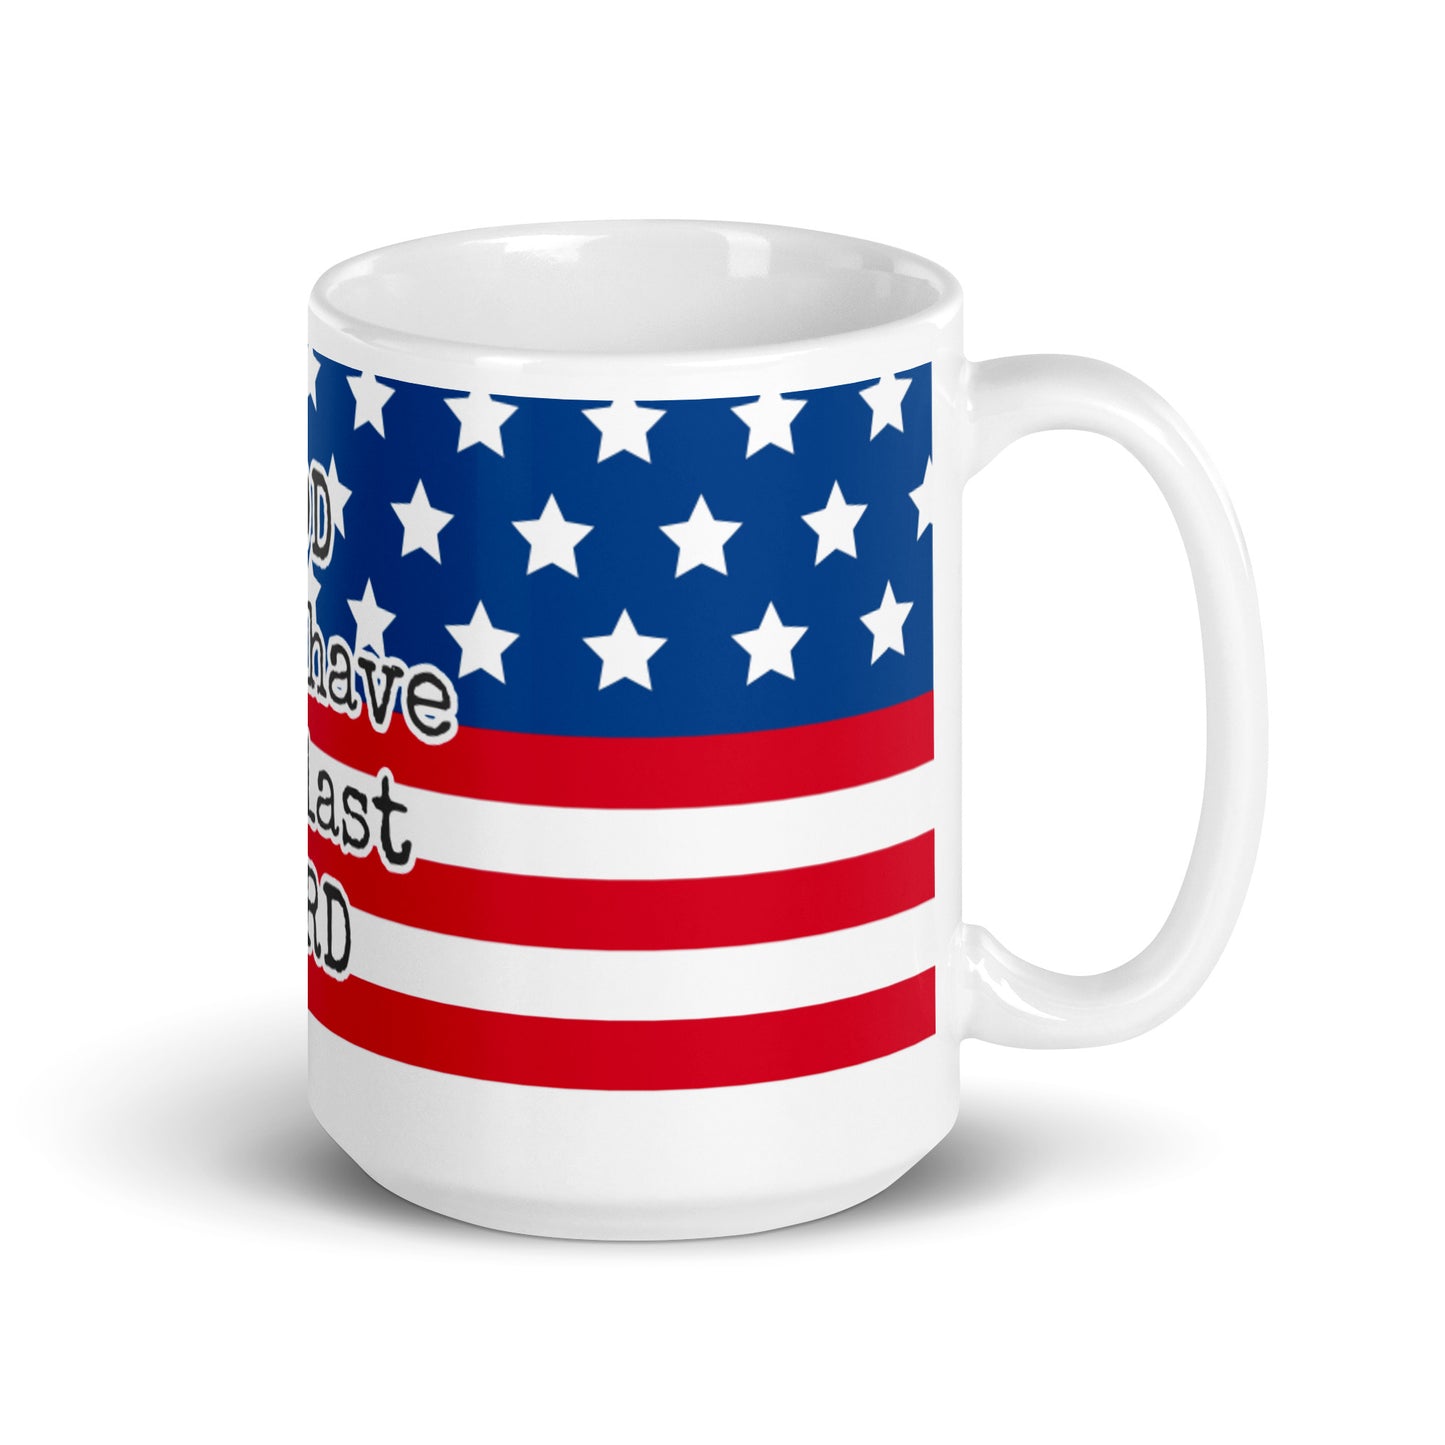 USA White Glossy Mug - Dieu aura le dernier mot